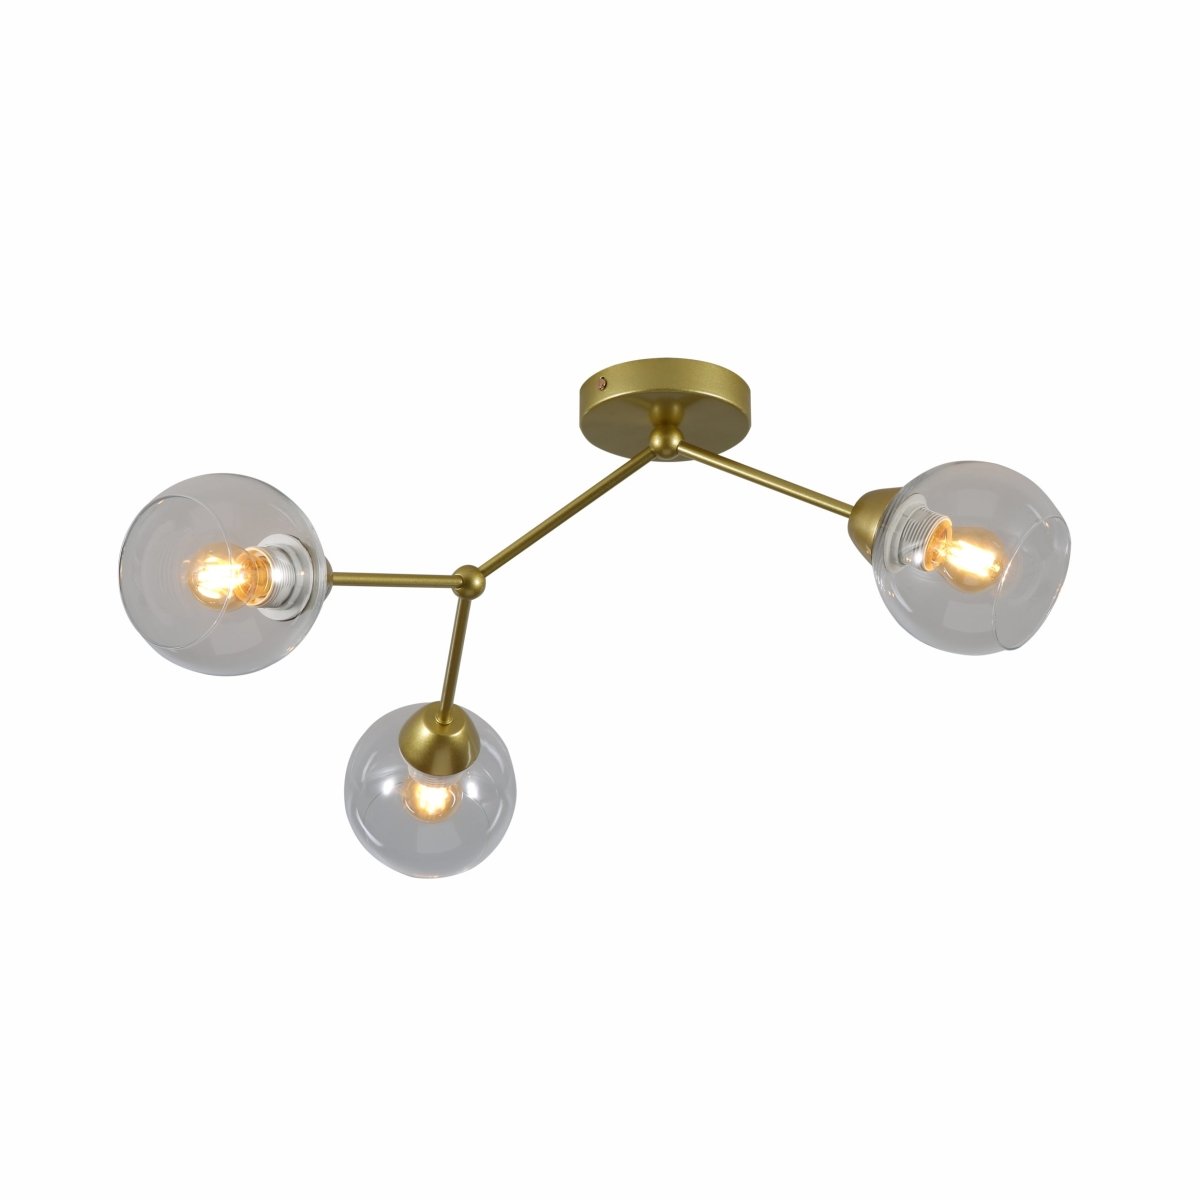 Main image of Clear Glass Gold Wishbone Branch Twig Semi Flush Modern Sputnik Ceiling Light with 3xE27 Fitting | TEKLED 159-17804